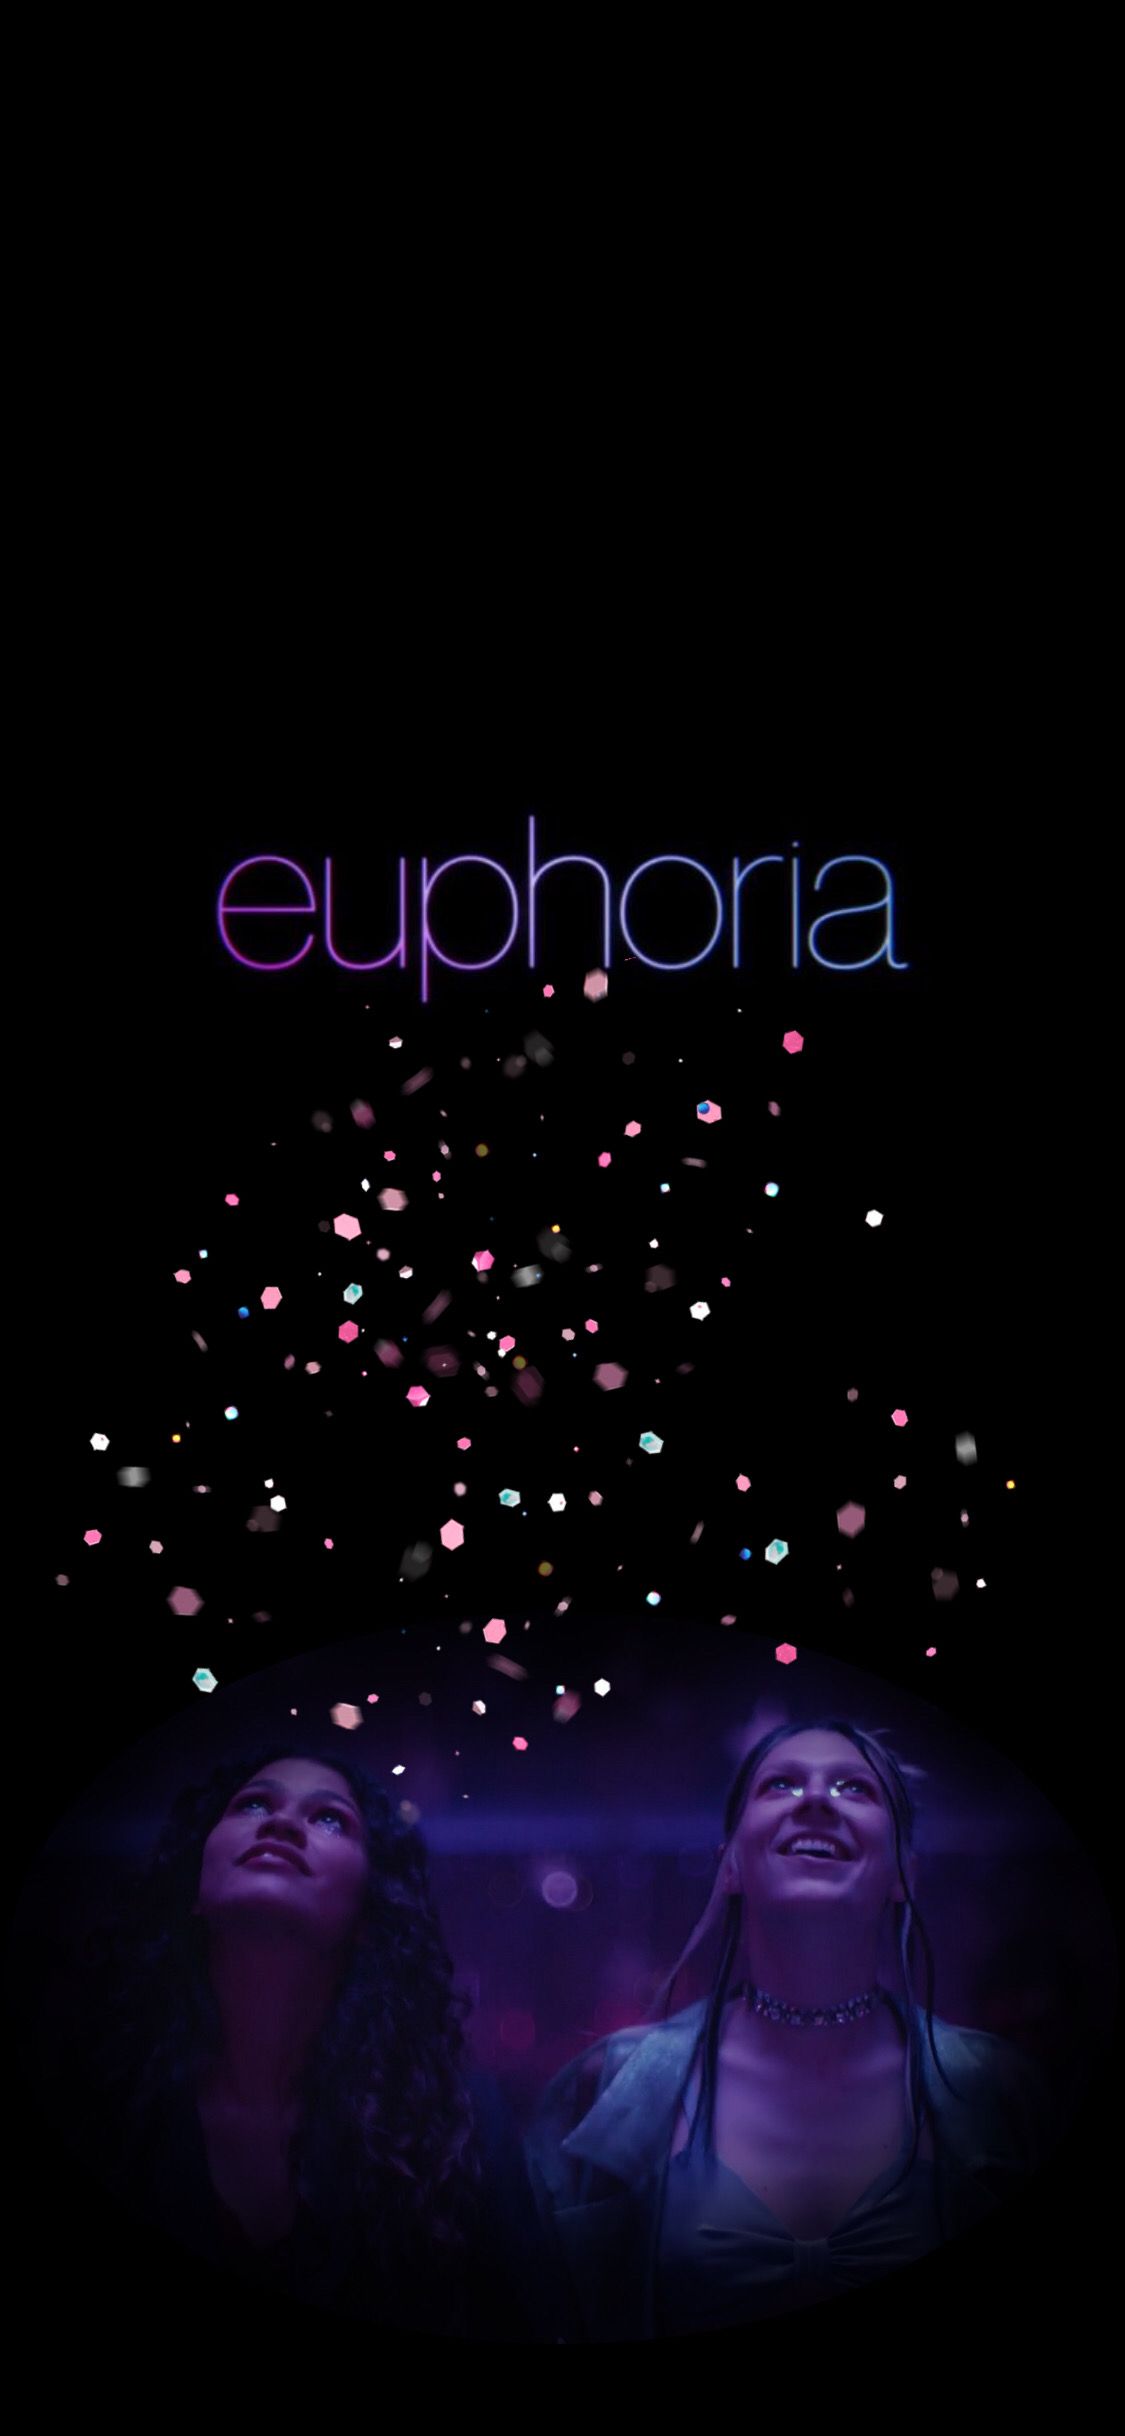 A poster for the movie ephoria - Euphoria, Zendaya